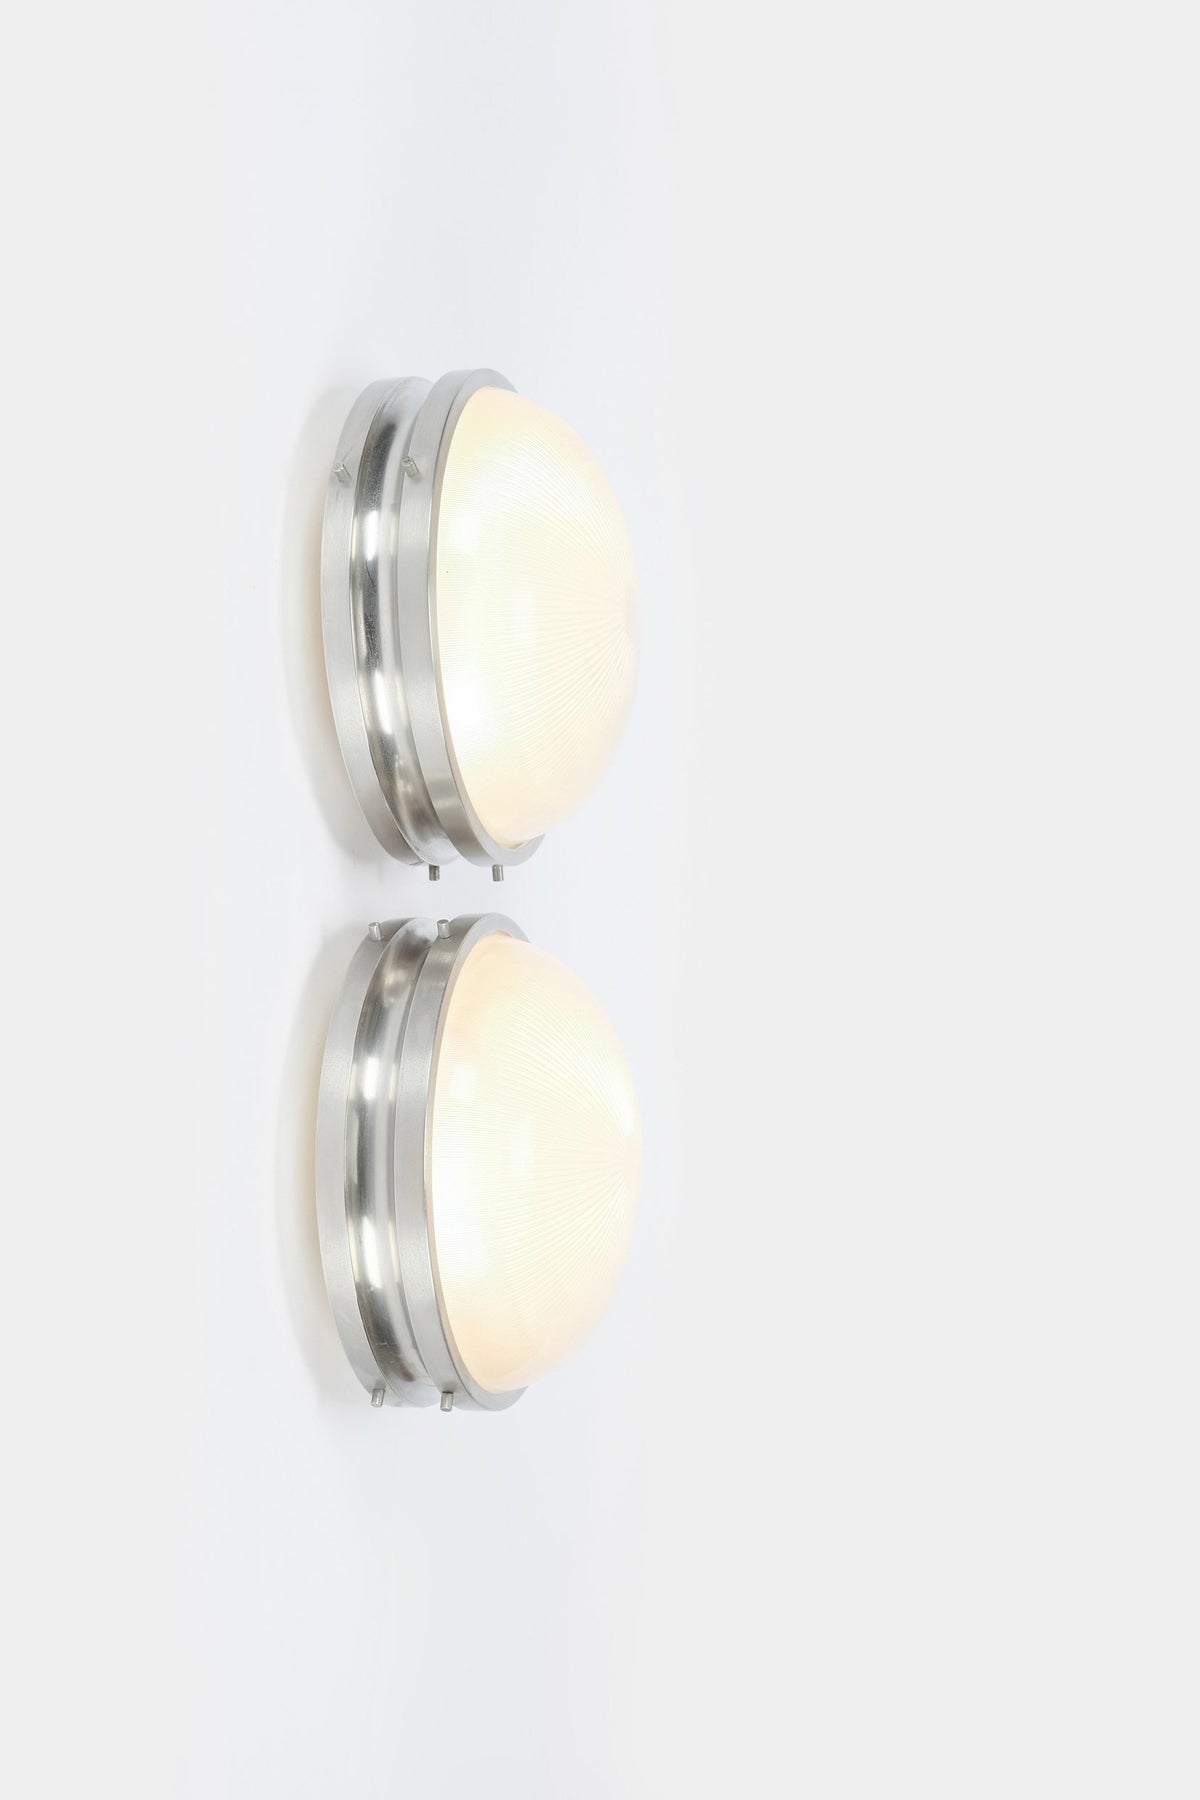 Sergio Mazza Sigma wall lamps pair 50s